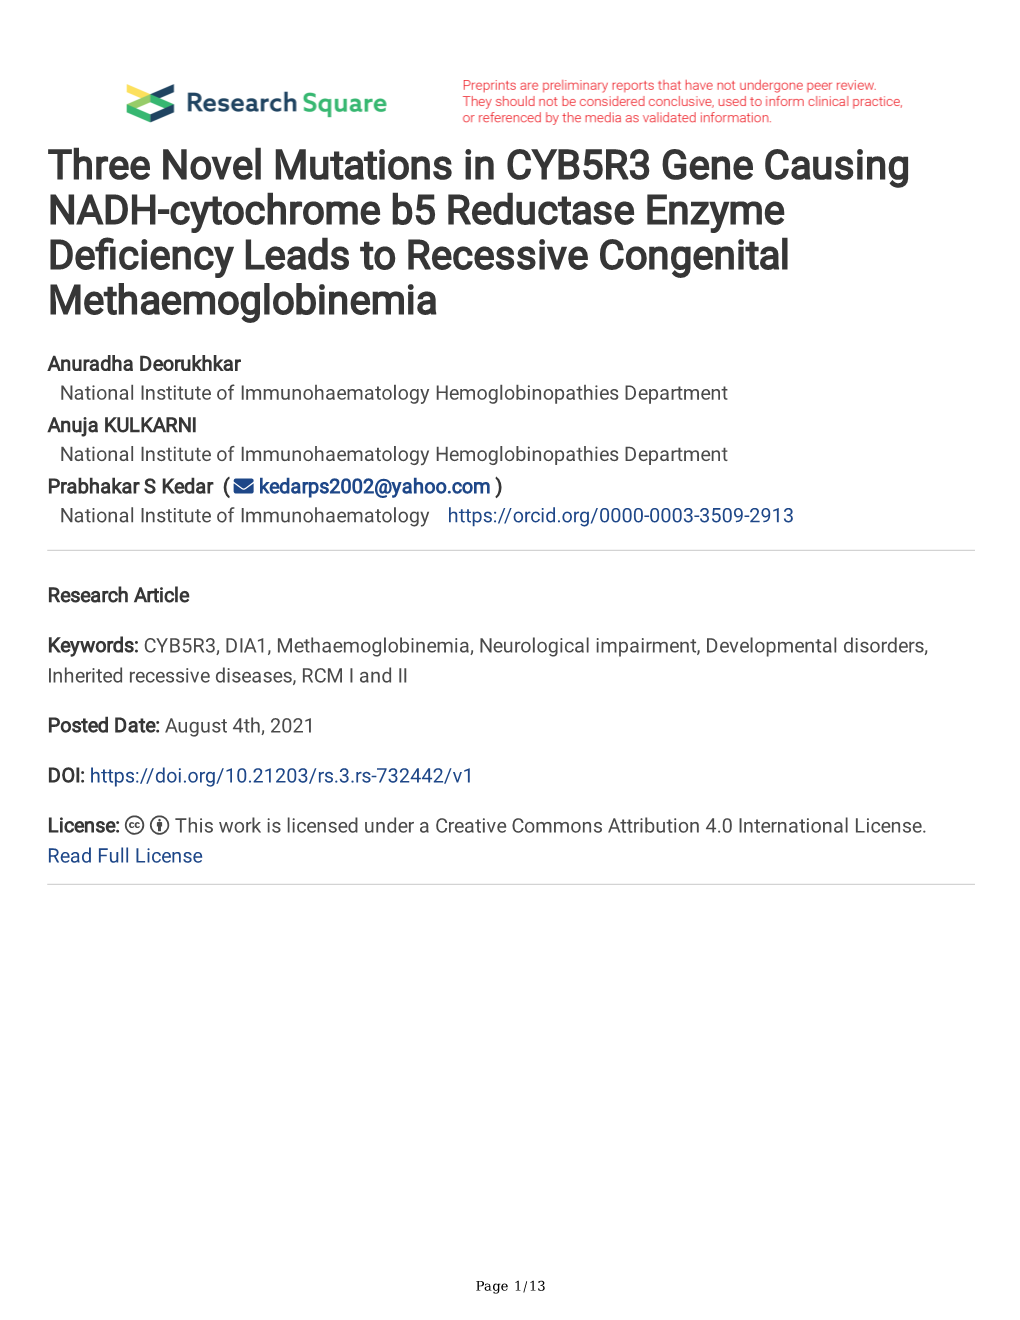 Three Novel Mutations in CYB5R3 Gene Causing NADH-Cytochrome B5 Reductase Enzyme Defciency Leads to Recessive Congenital Methaemoglobinemia